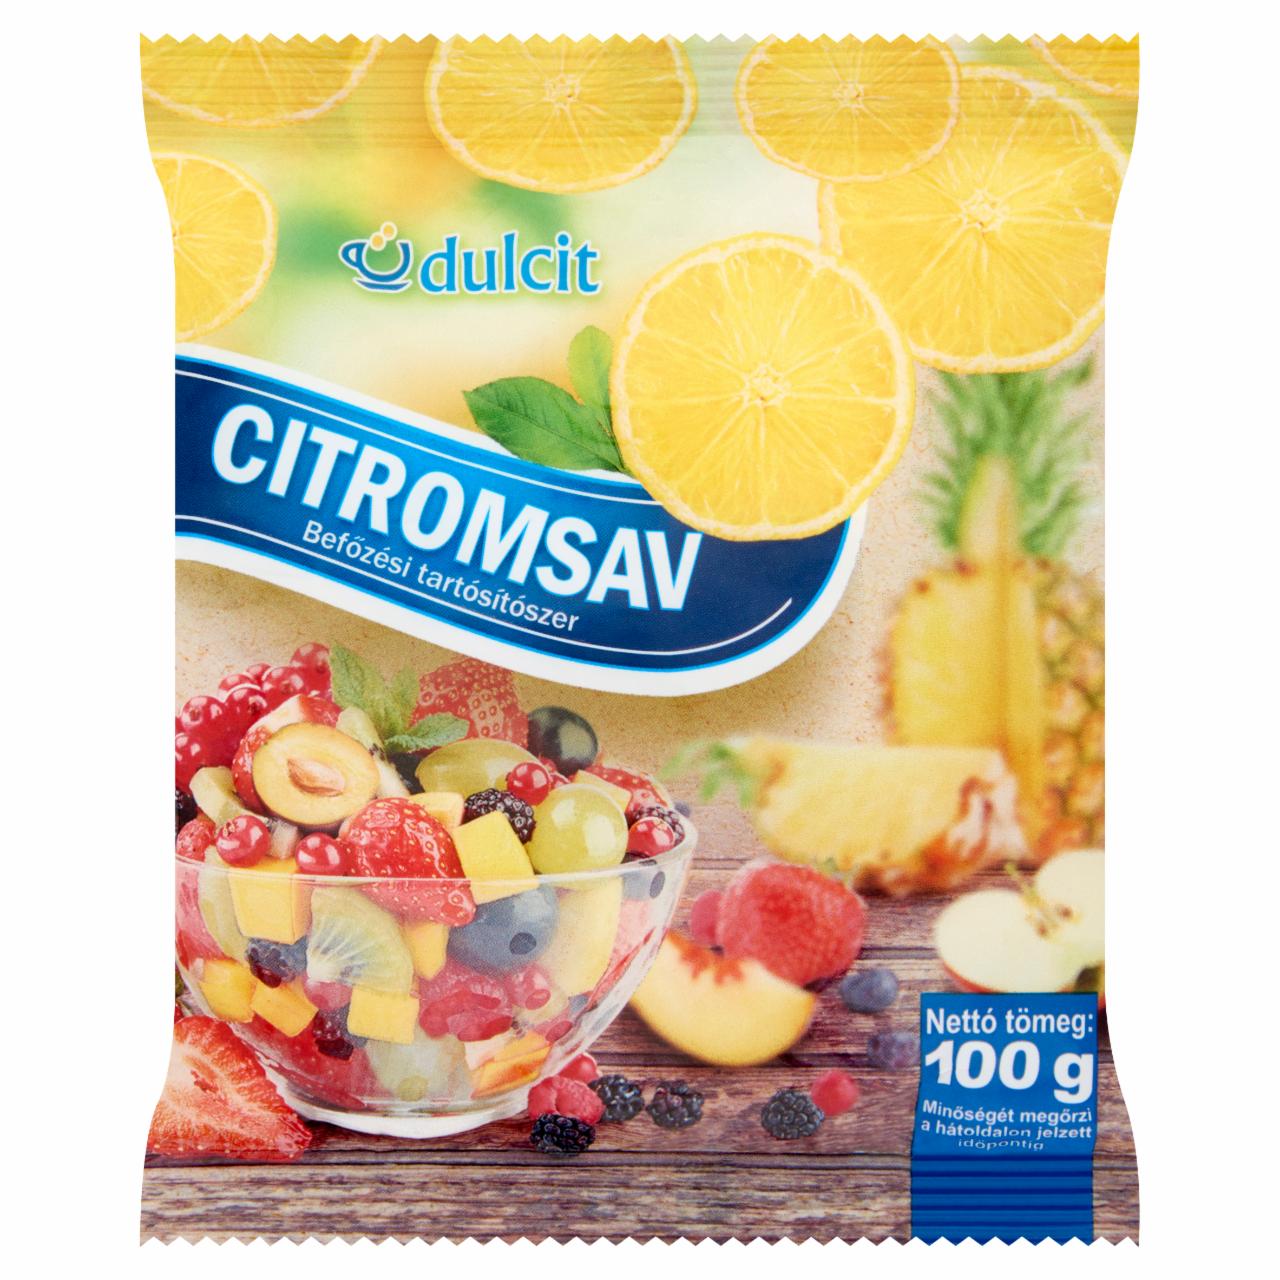 Képek - Dulcit citromsav 100 g